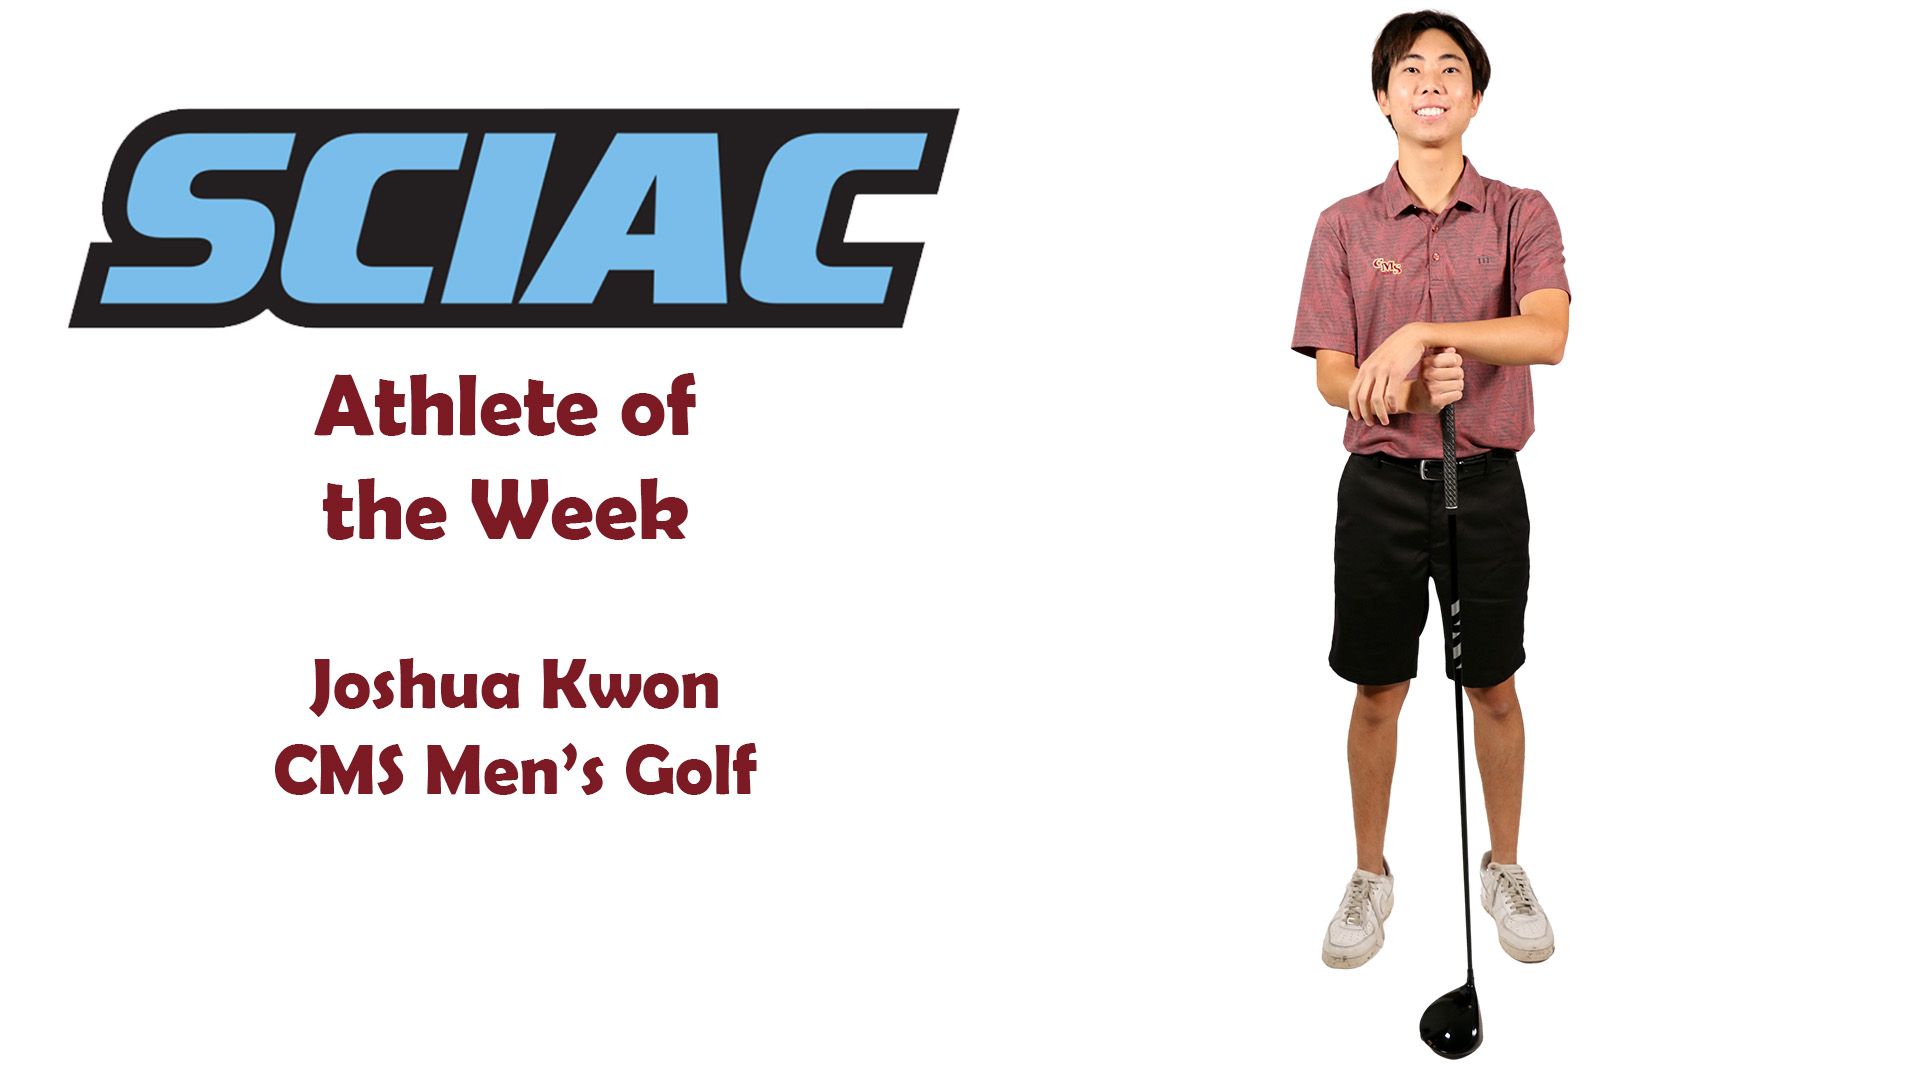 posed shot of Joshua Kwon with the SCIAC logo